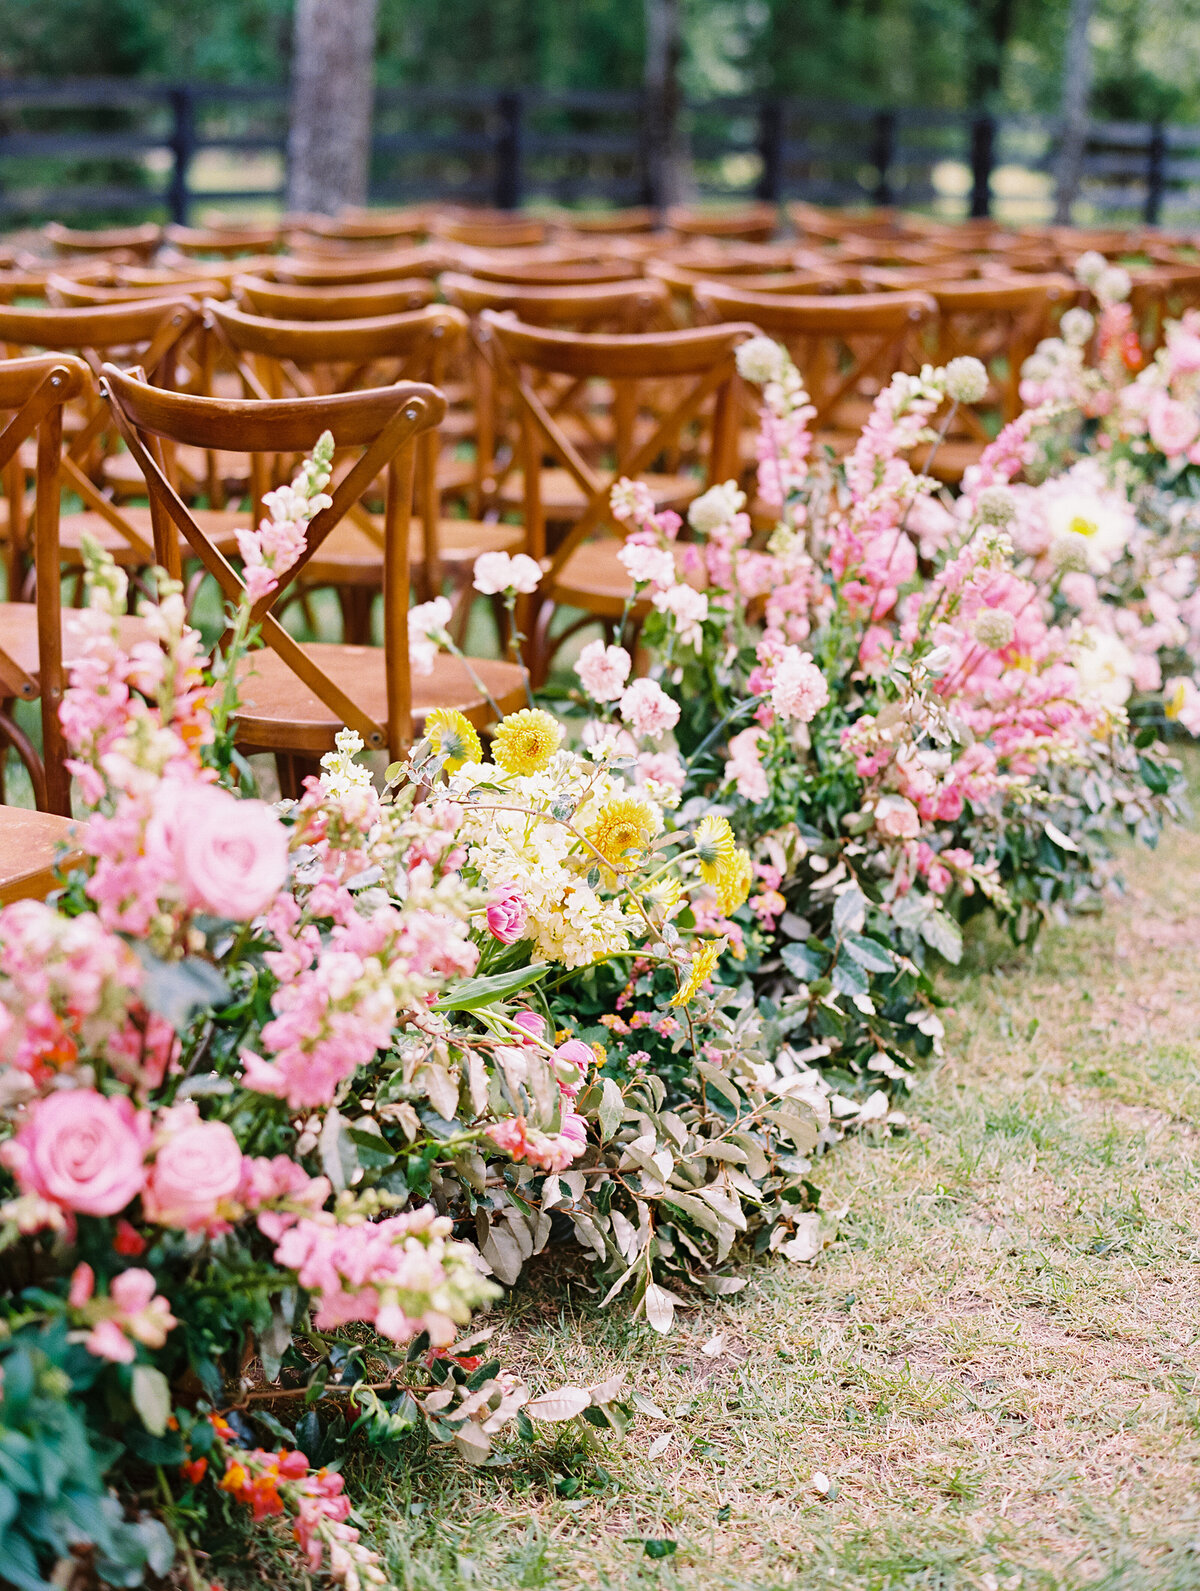 max-owens-design-bright-summer-wedding-08-ceremony-aisle